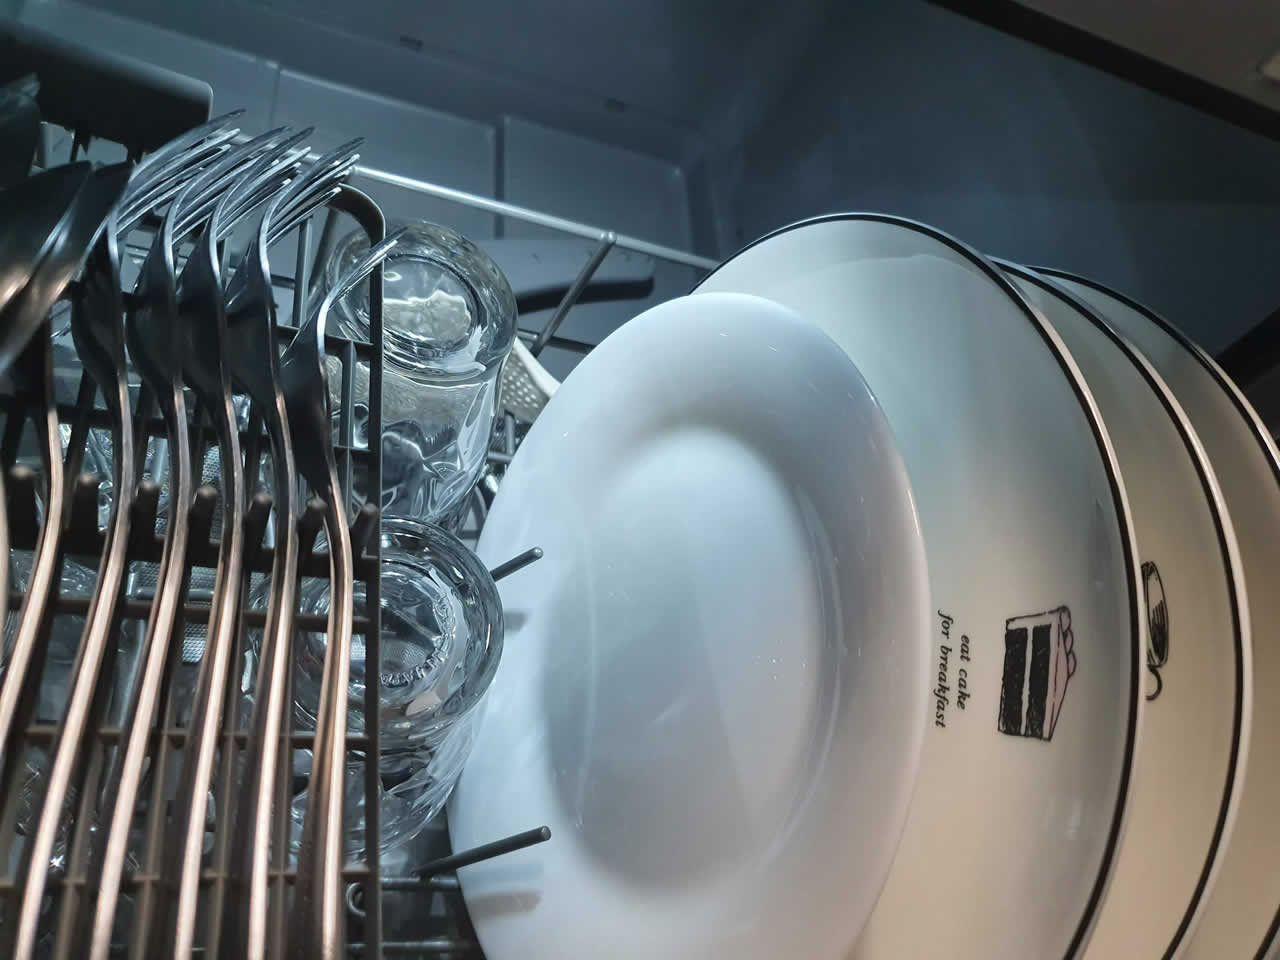 Maximus dishwasher done its job using rapid mode.